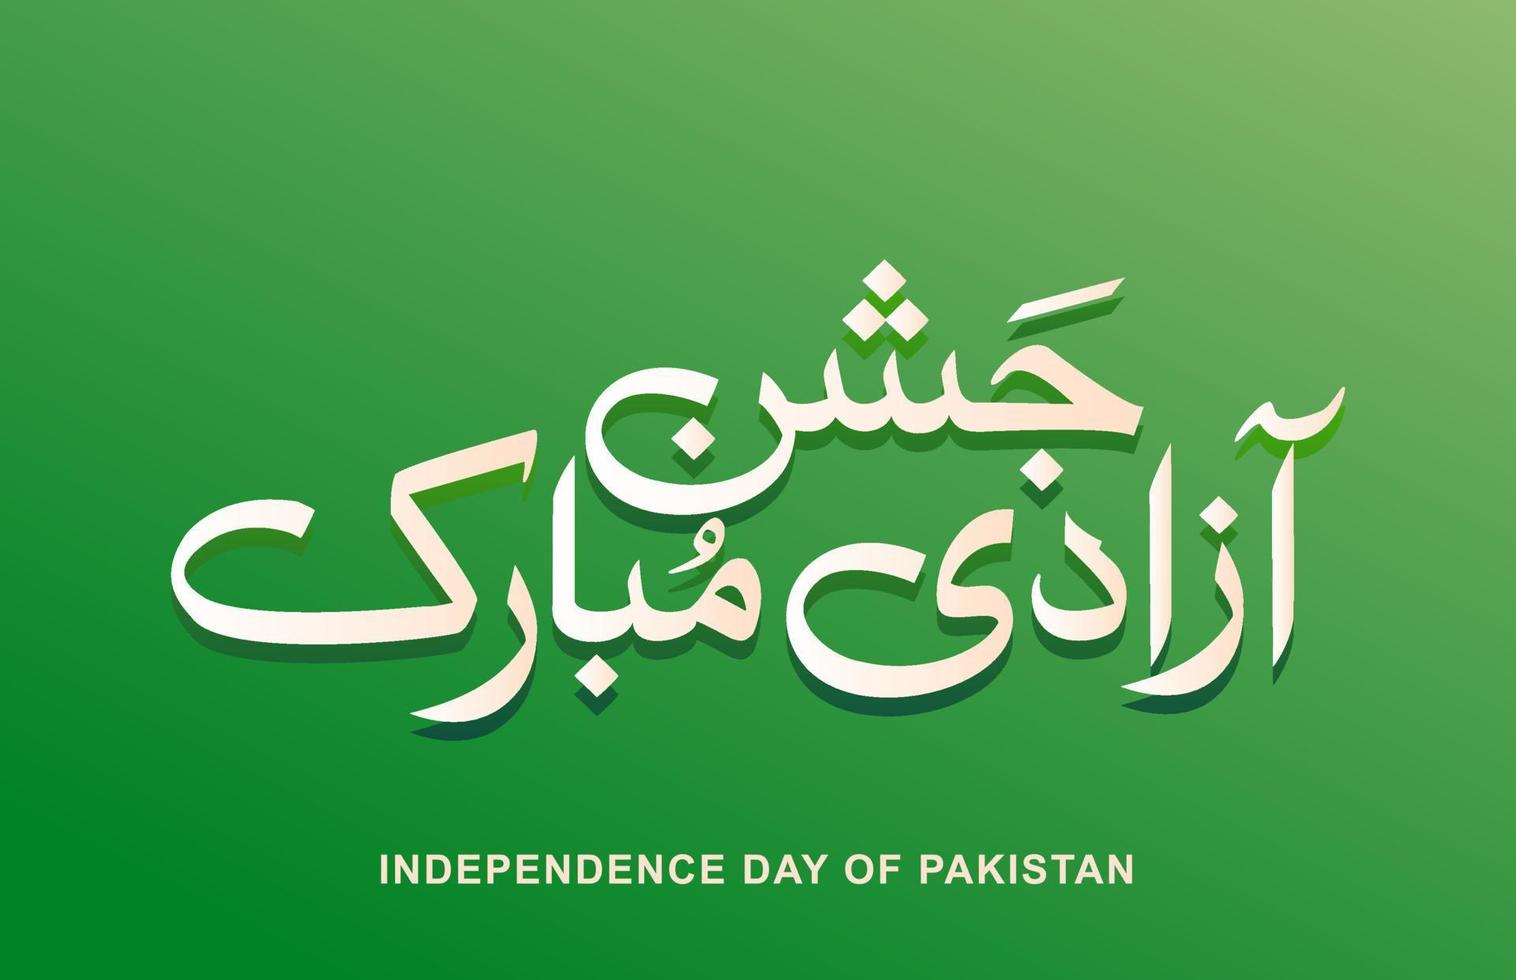 Jashn e Azadi Mubarak Pakistan Independence Day Urdu Calligraphy Green and white color vector